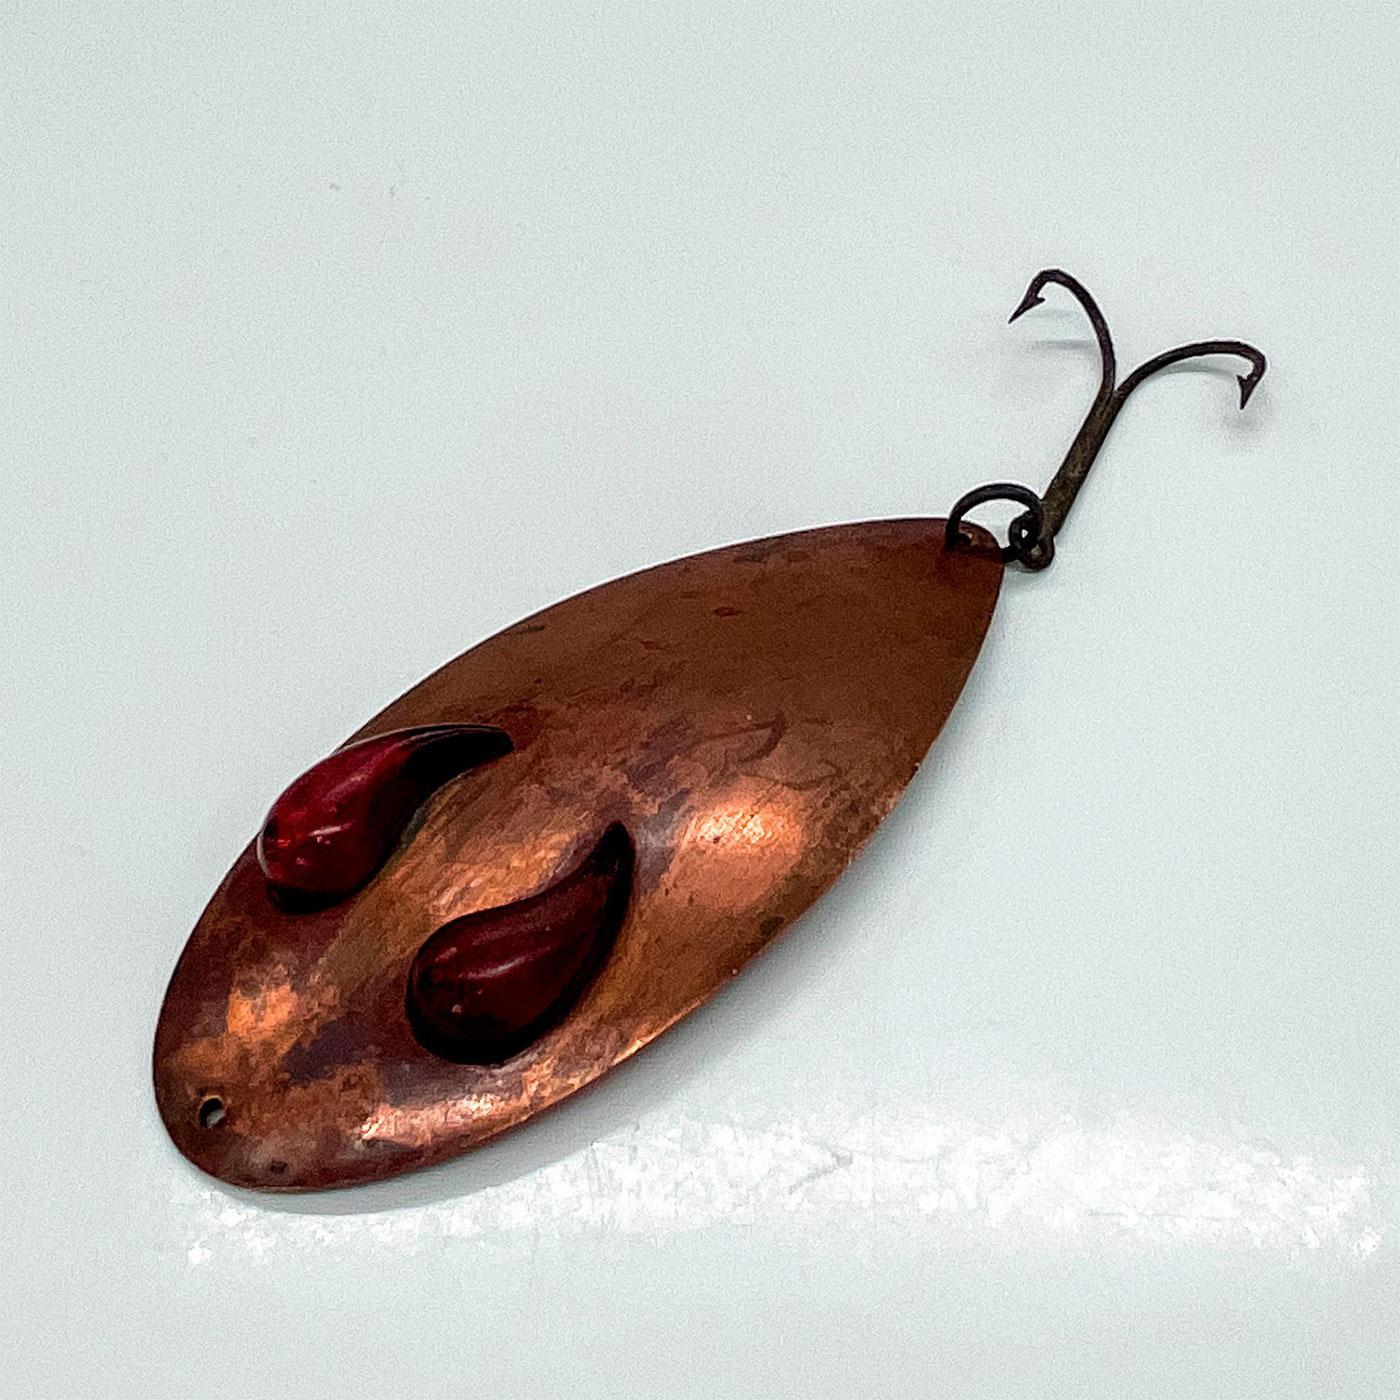 Paul Bunyan Flash Eye Spoon Vintage Jig Fishing Lures, One Bad Eye - Read